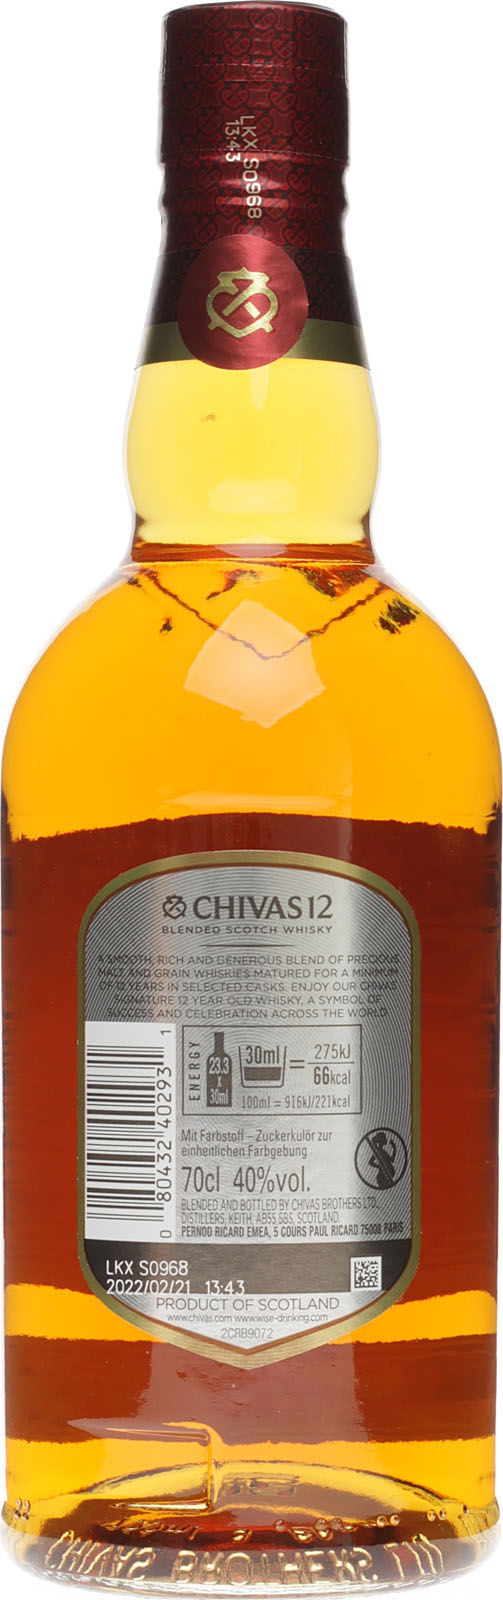 Jahre Chivas Regal m Whisky Scotch - Blended Premium 12